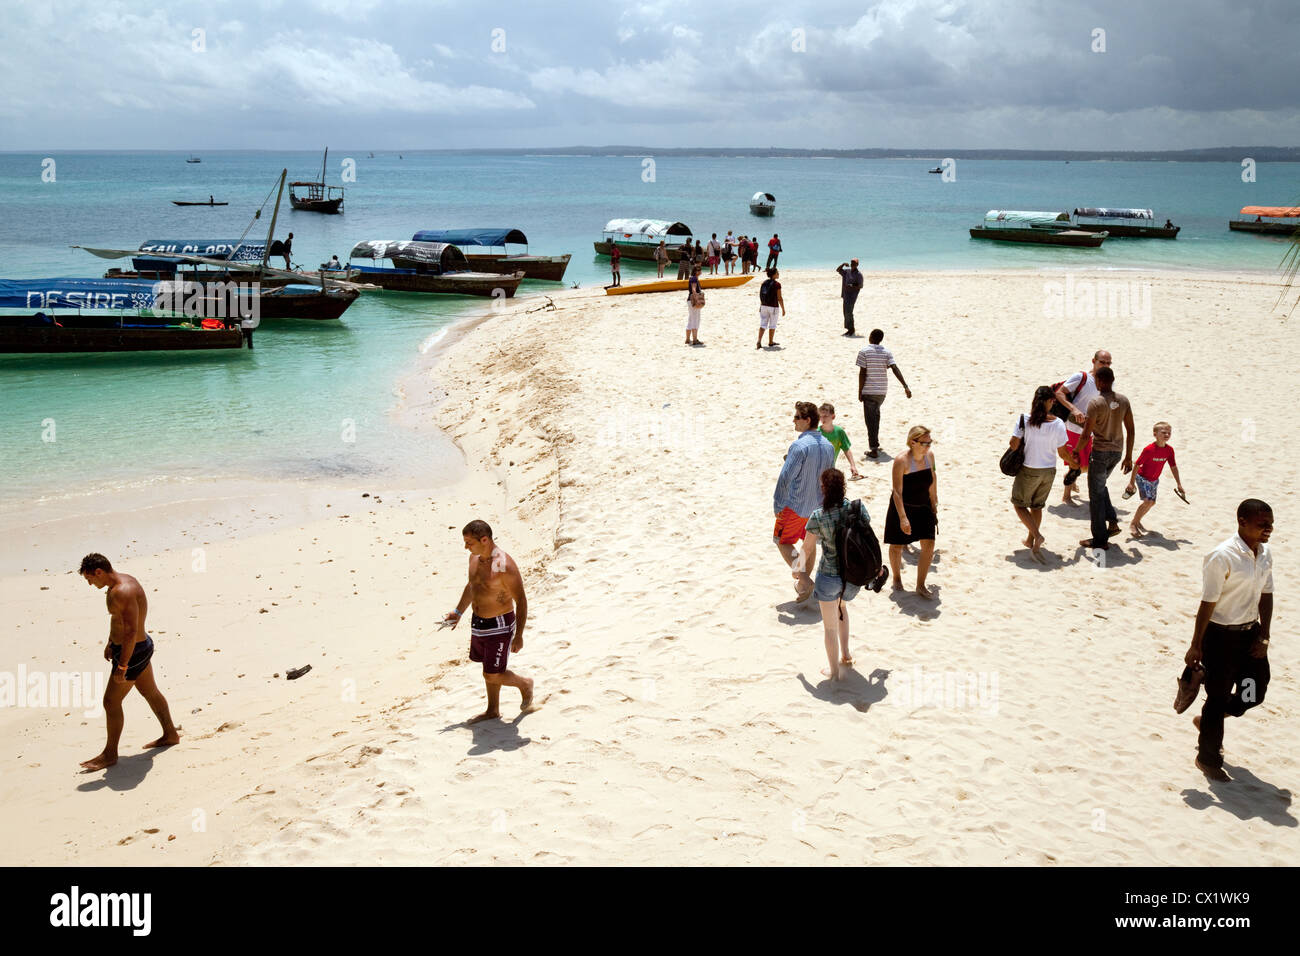 Africa beach; Tourists arriving on the beach by boat, Prison Island (Changuu), Zanzibar Africa Stock Photo